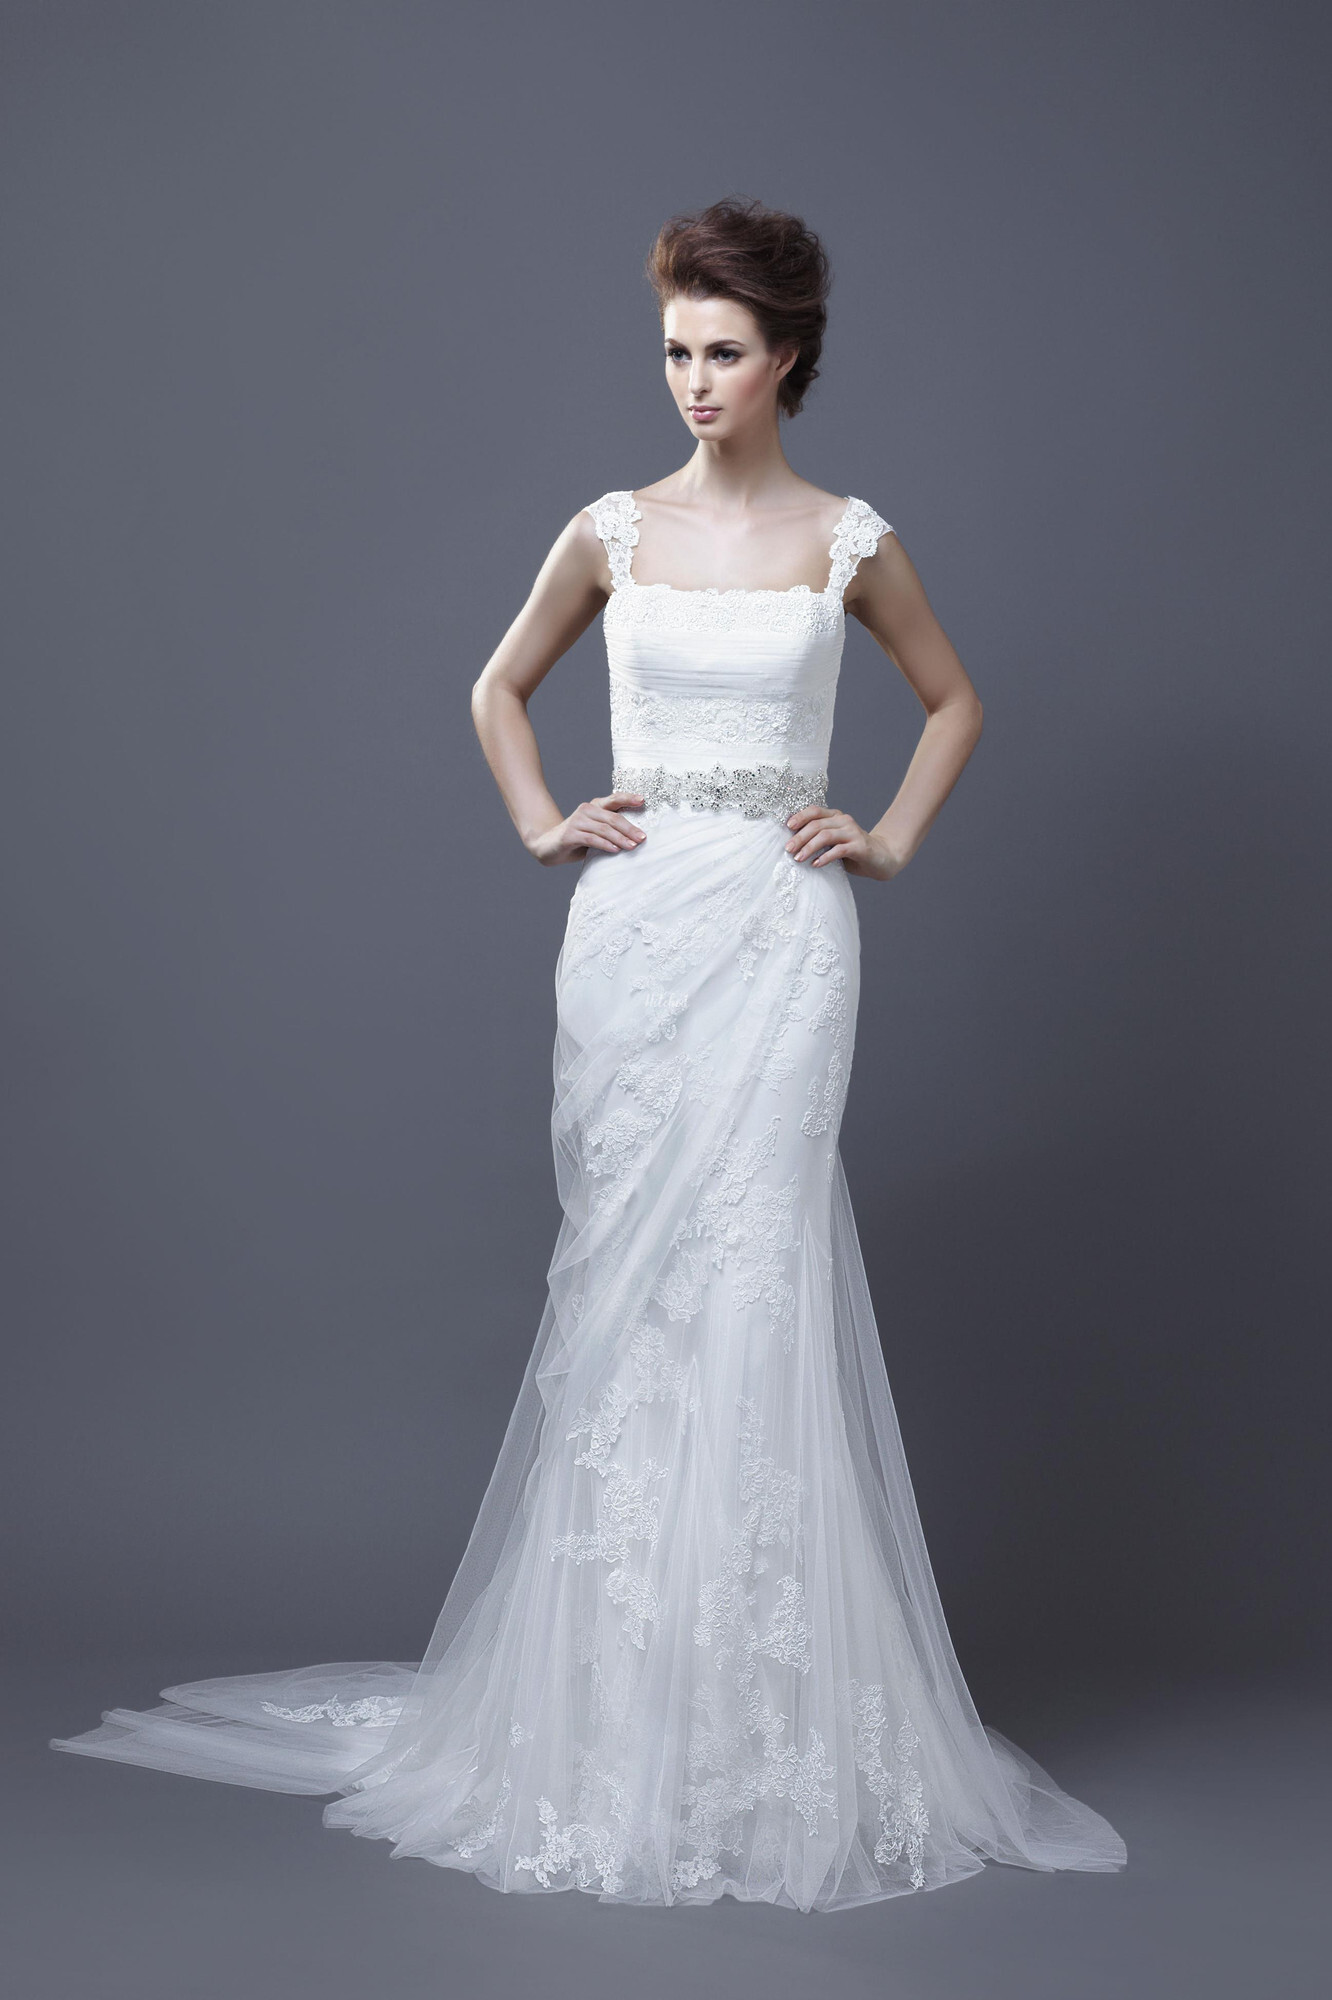 Helen Wedding Dress from Enzoani - hitched.co.uk